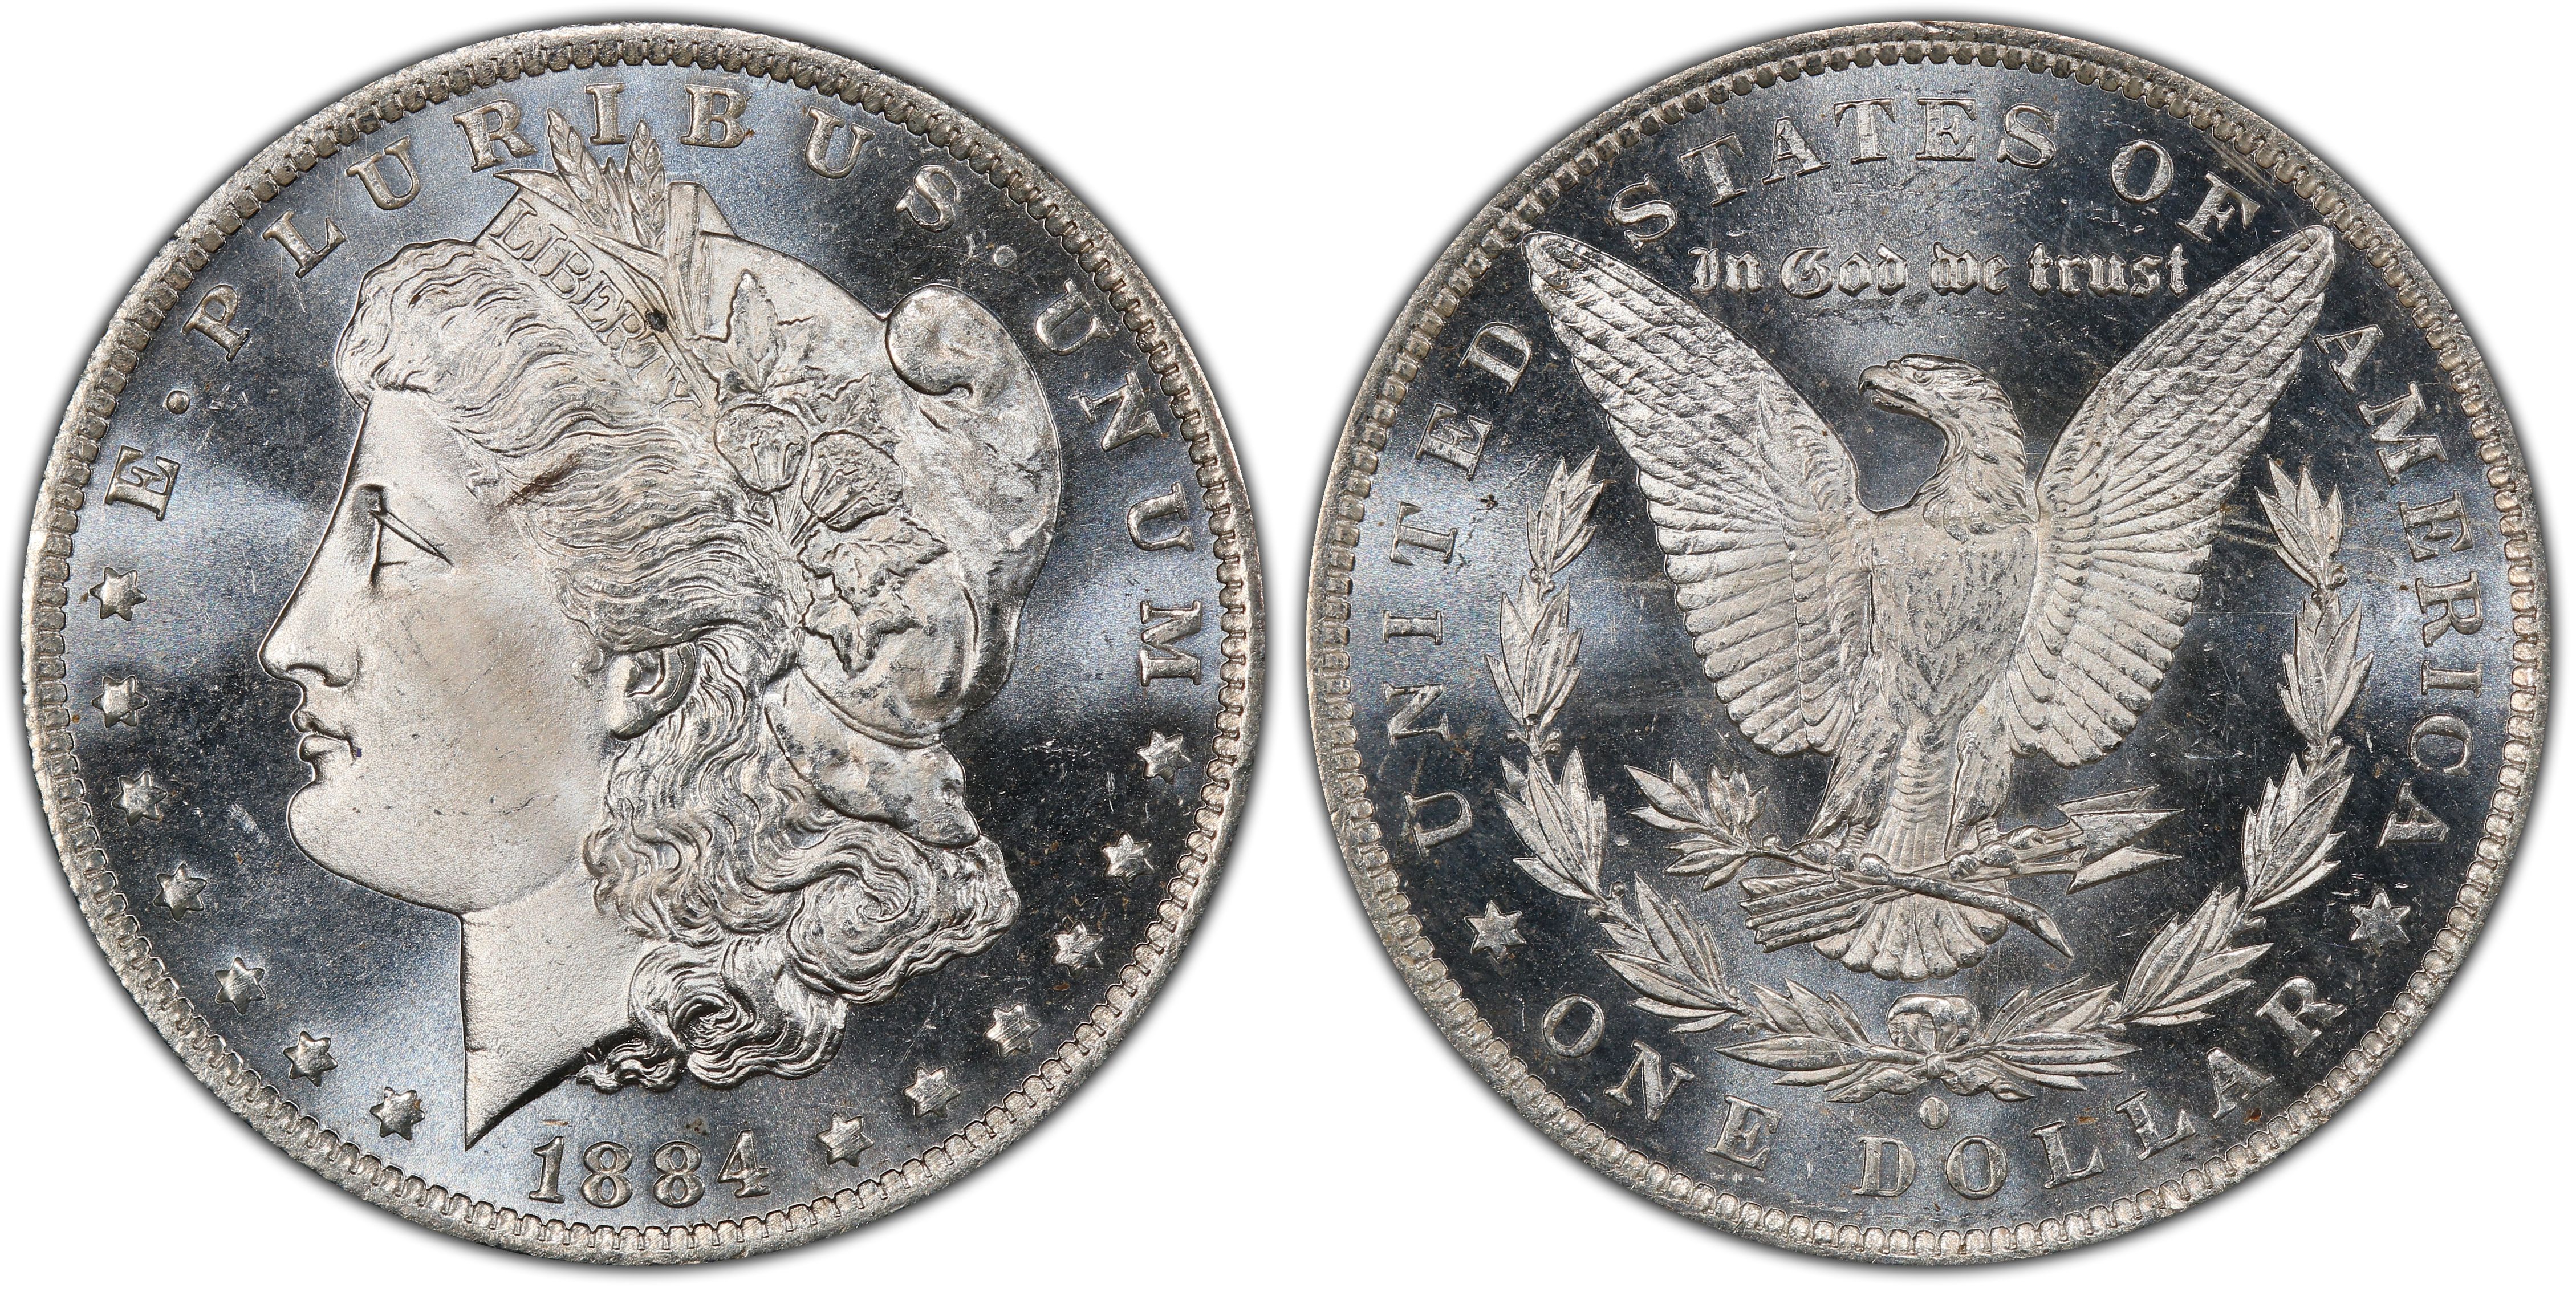 1884-O $1, PL (Regular Strike) Morgan Dollar - PCGS CoinFacts